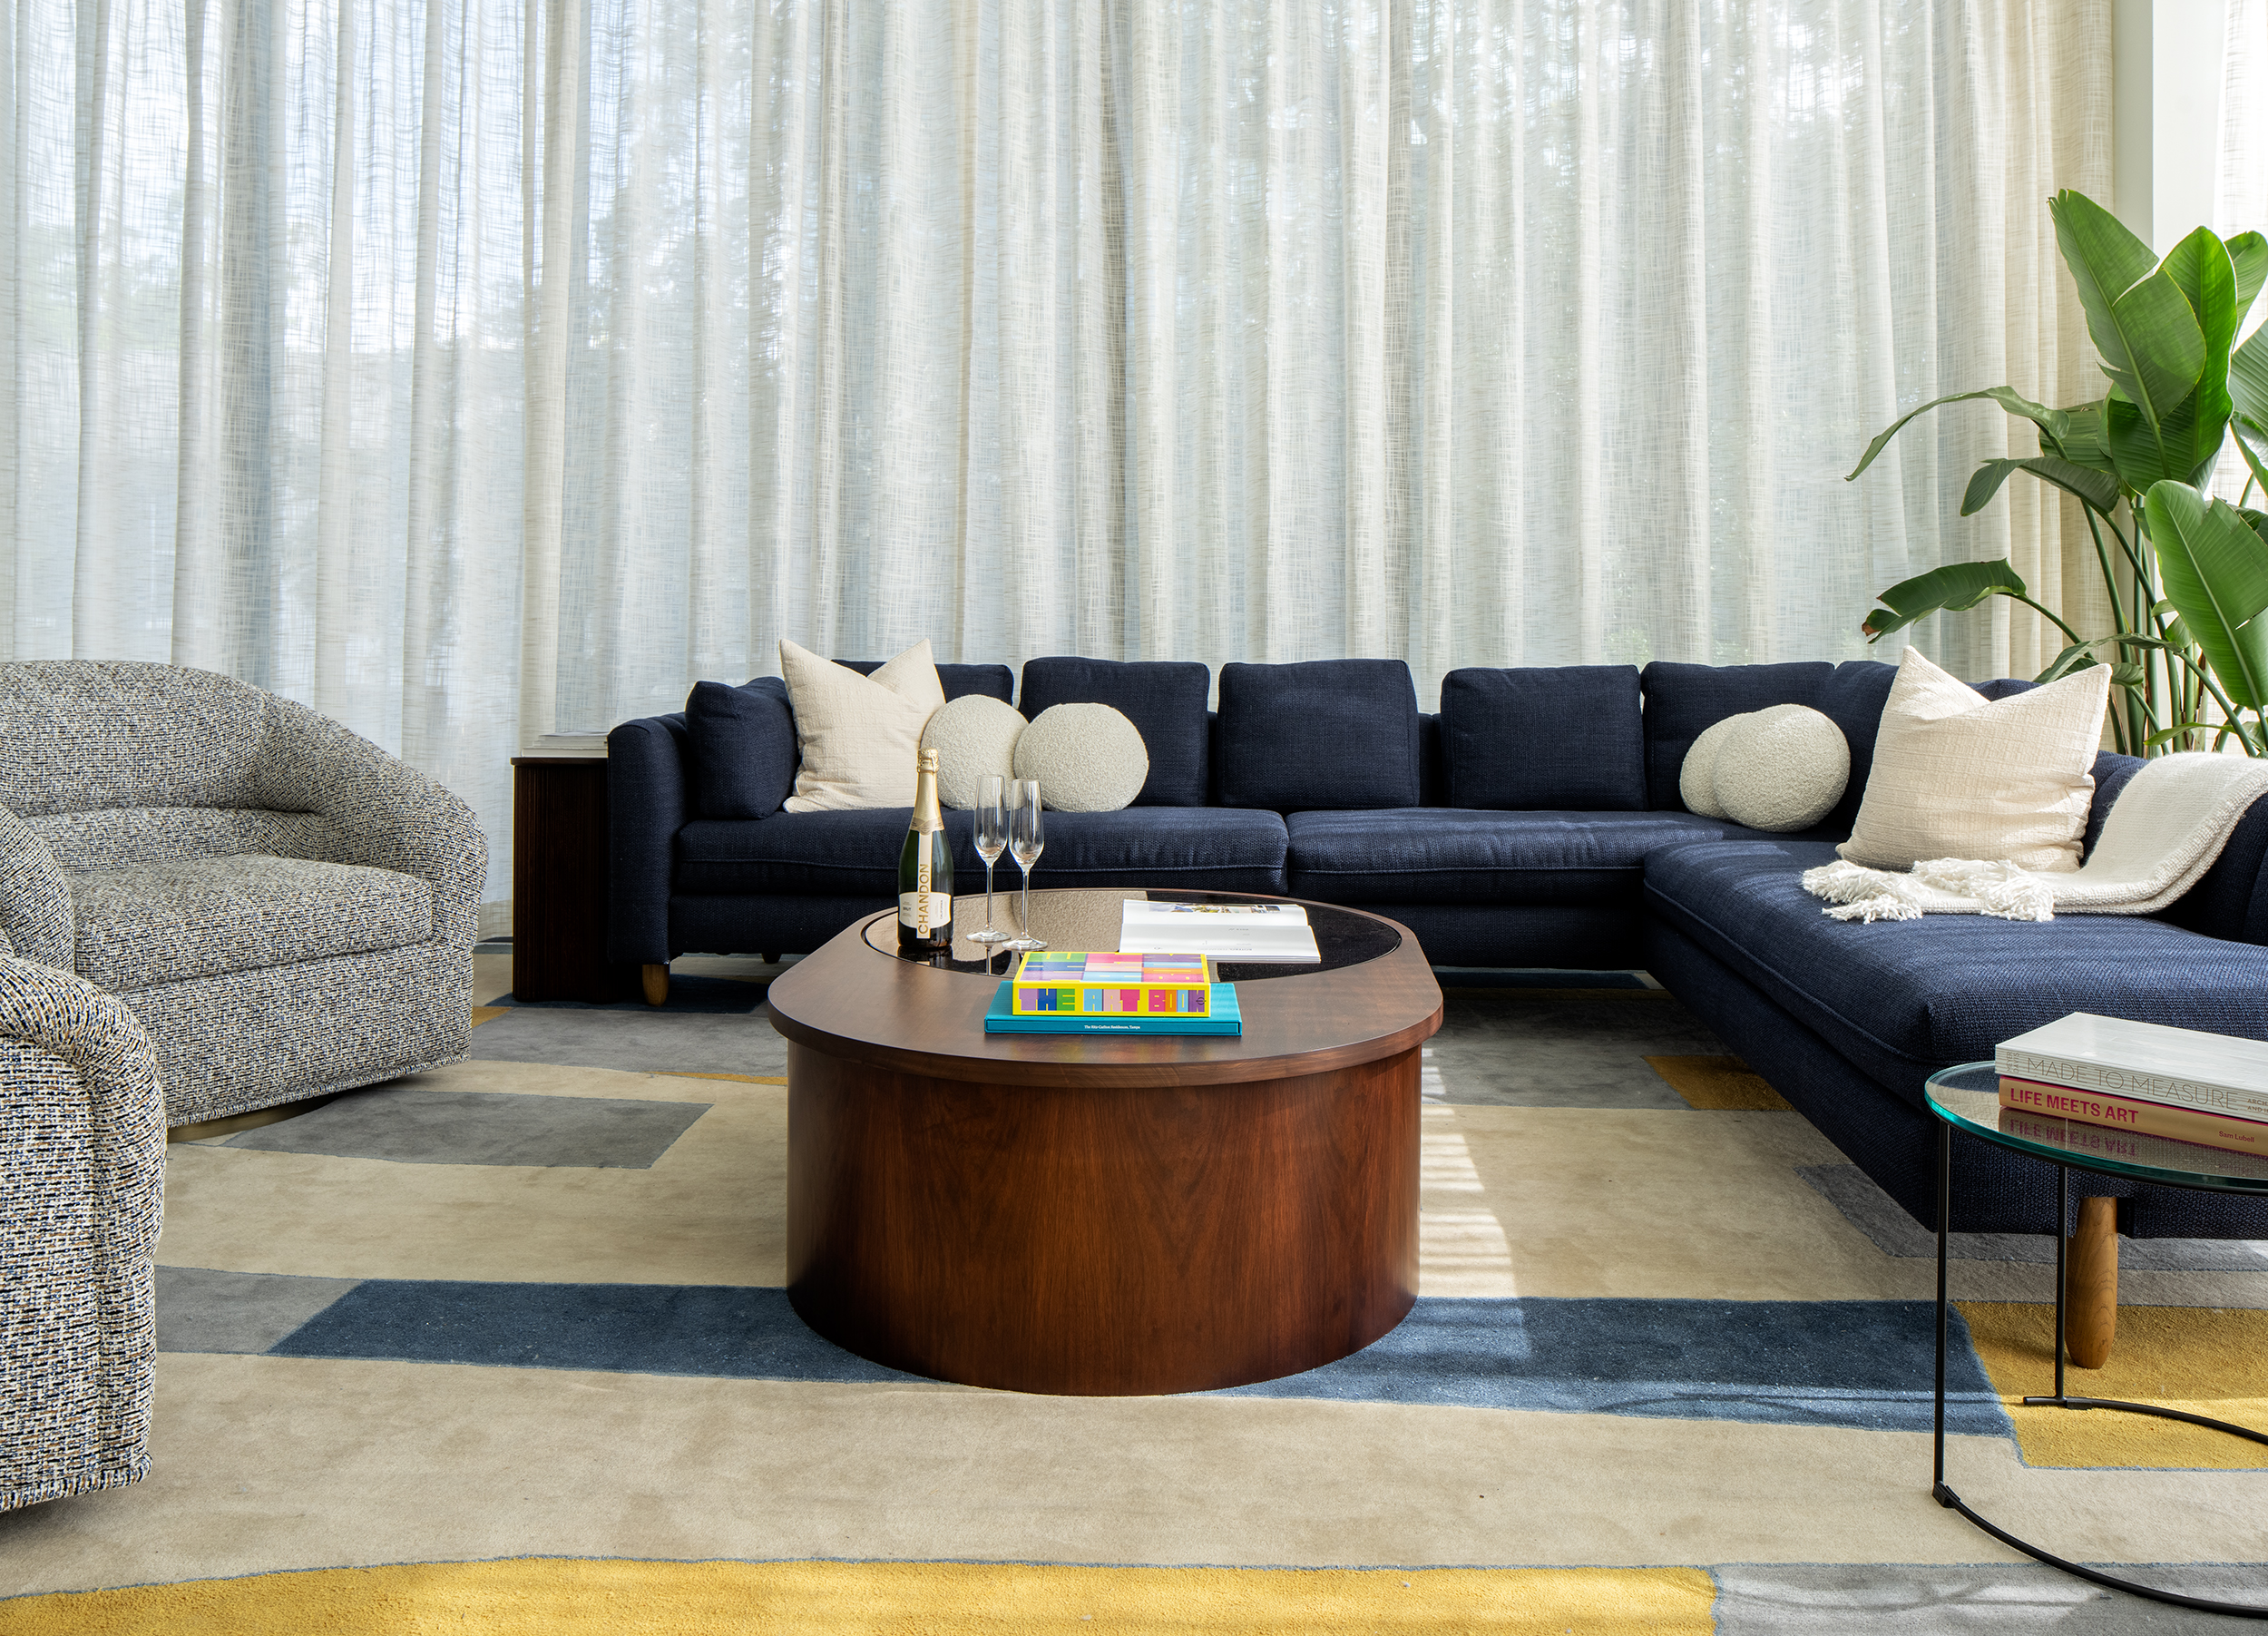 Ritz Residences Tampa Sales Center - Model Living Room Deco Vignette